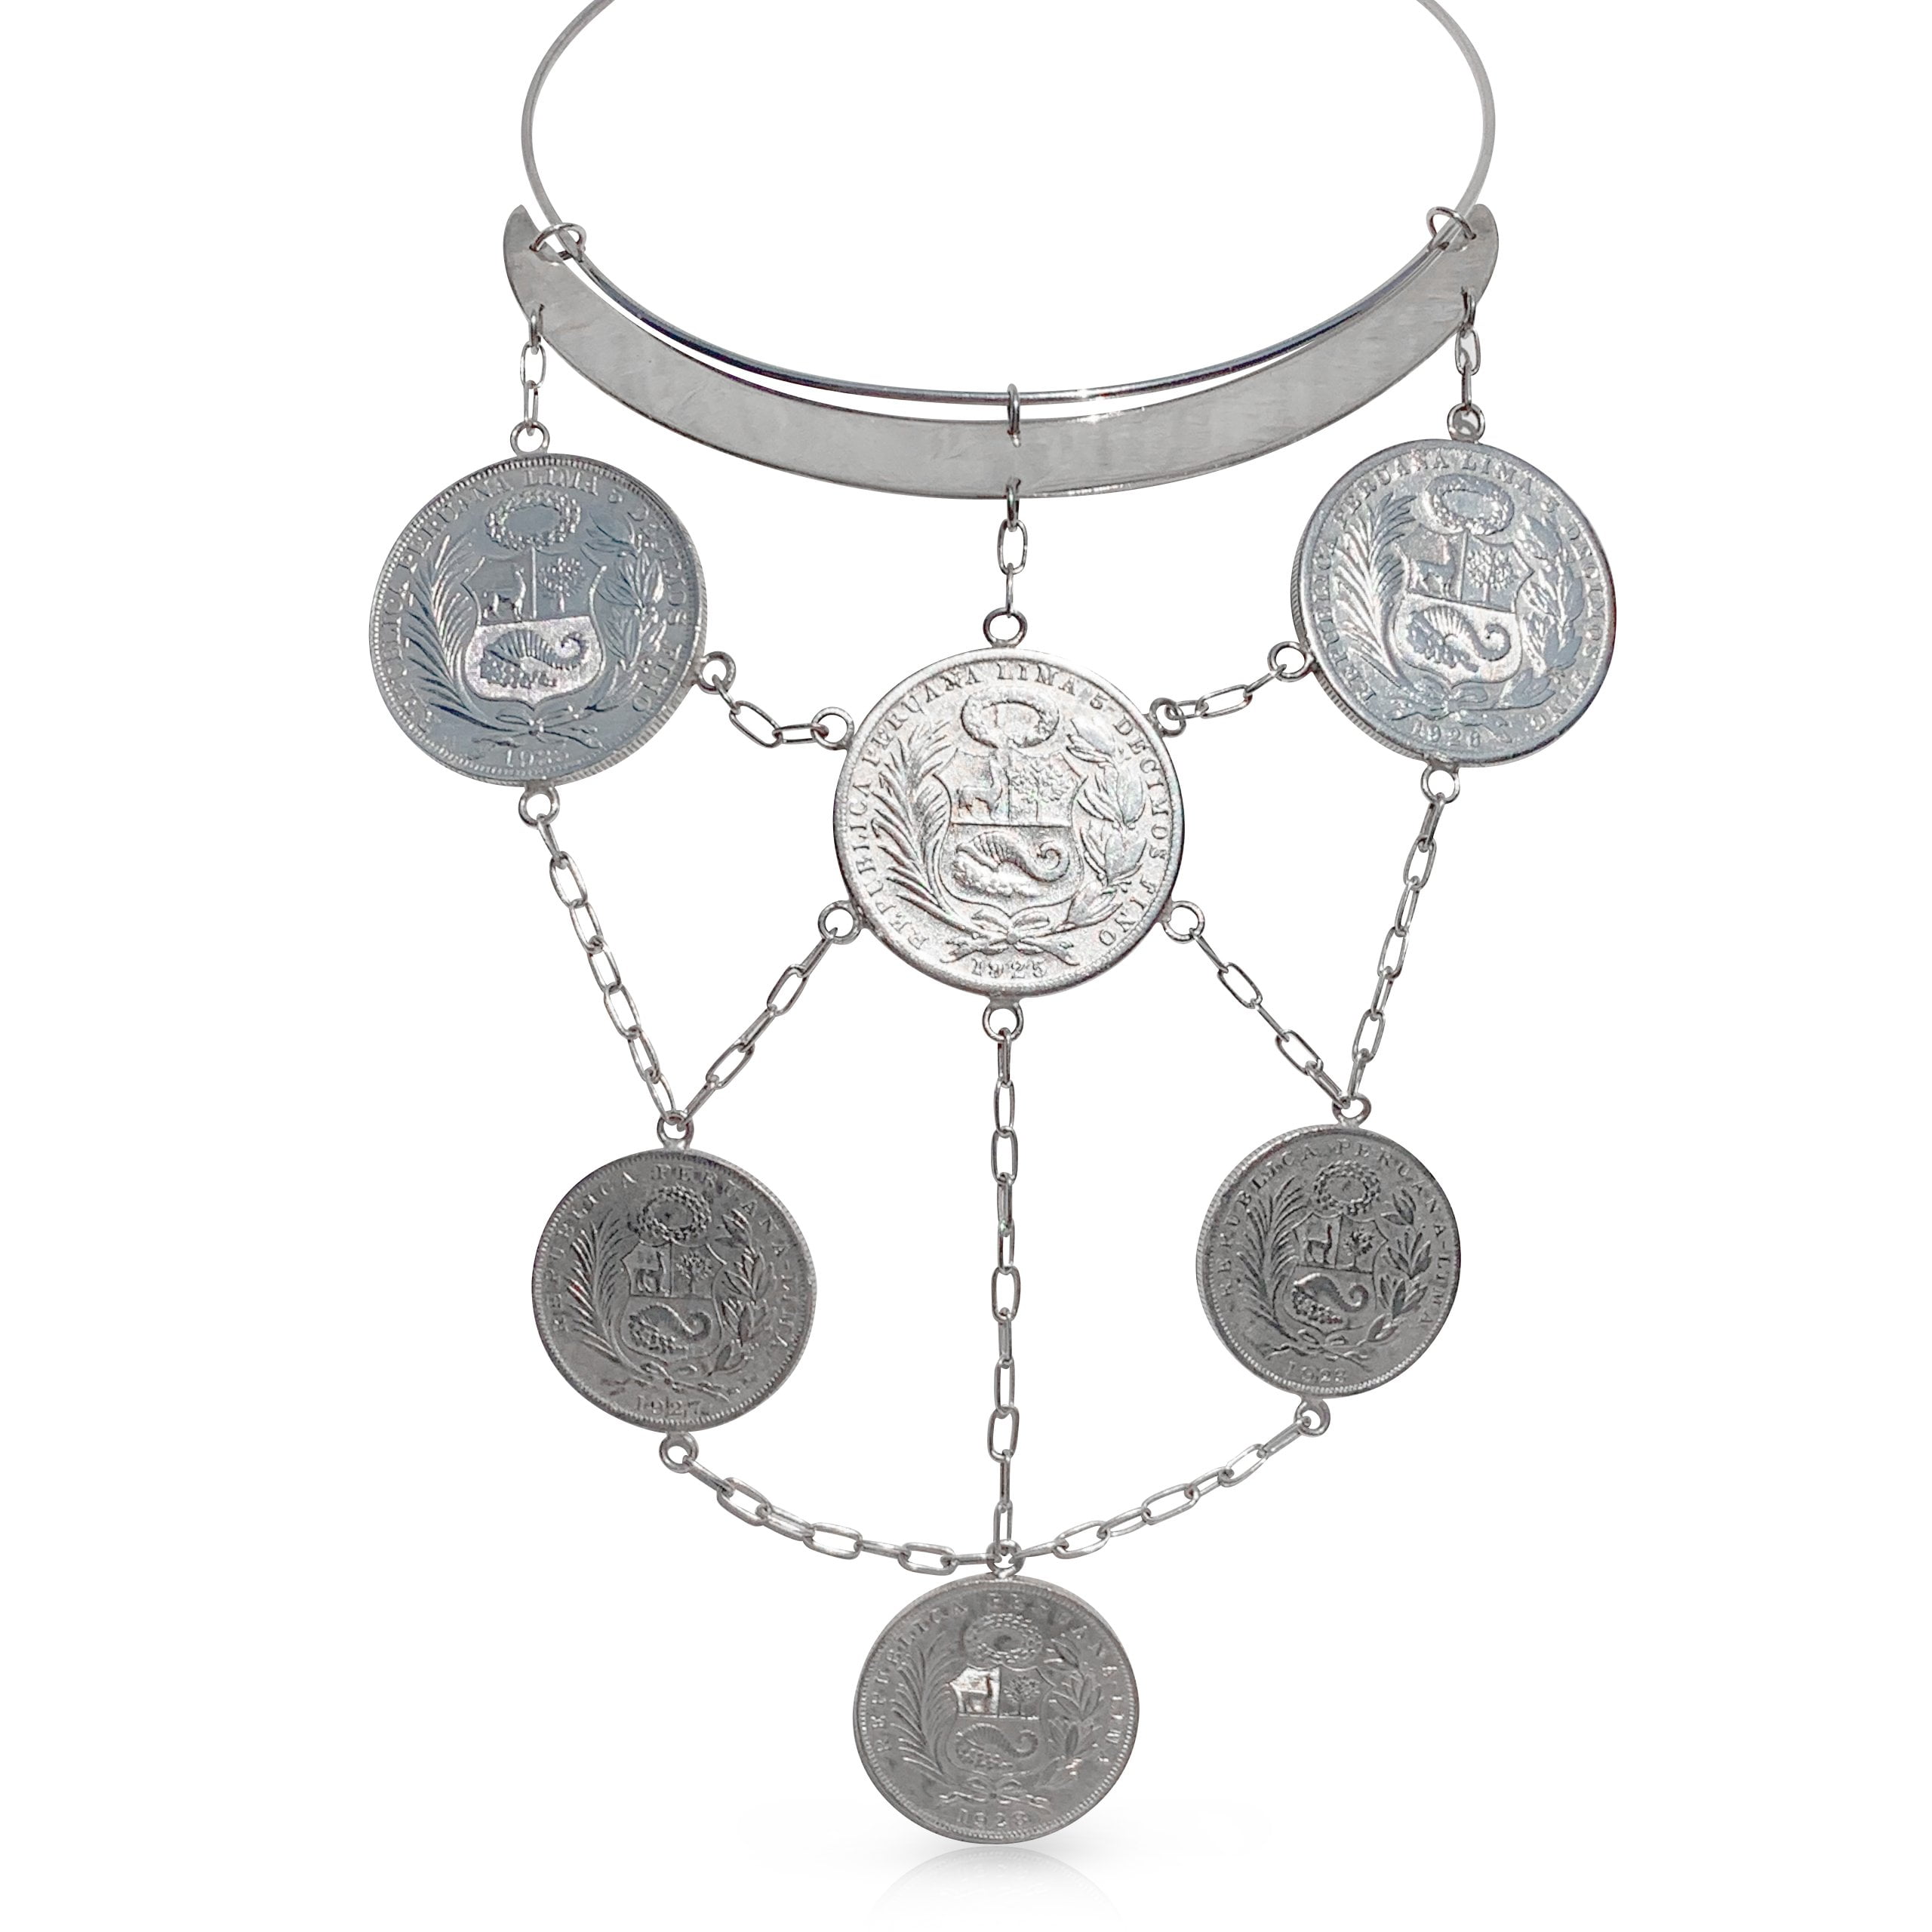 Peruvian silver coins necklace